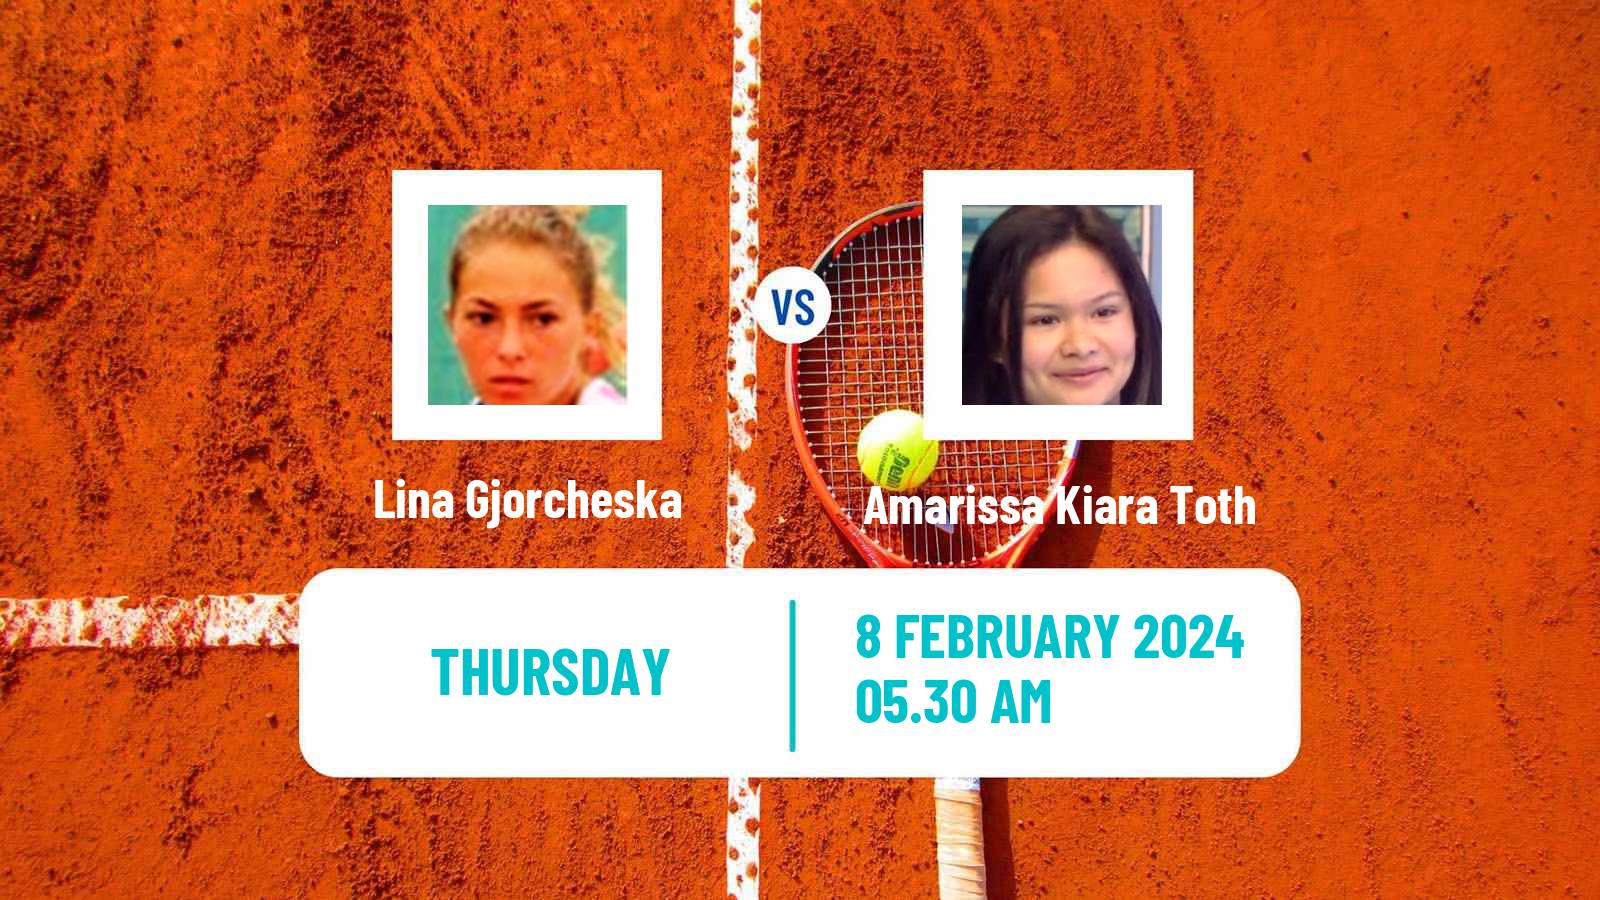 Tennis ITF W35 Antalya 2 Women Lina Gjorcheska - Amarissa Kiara Toth